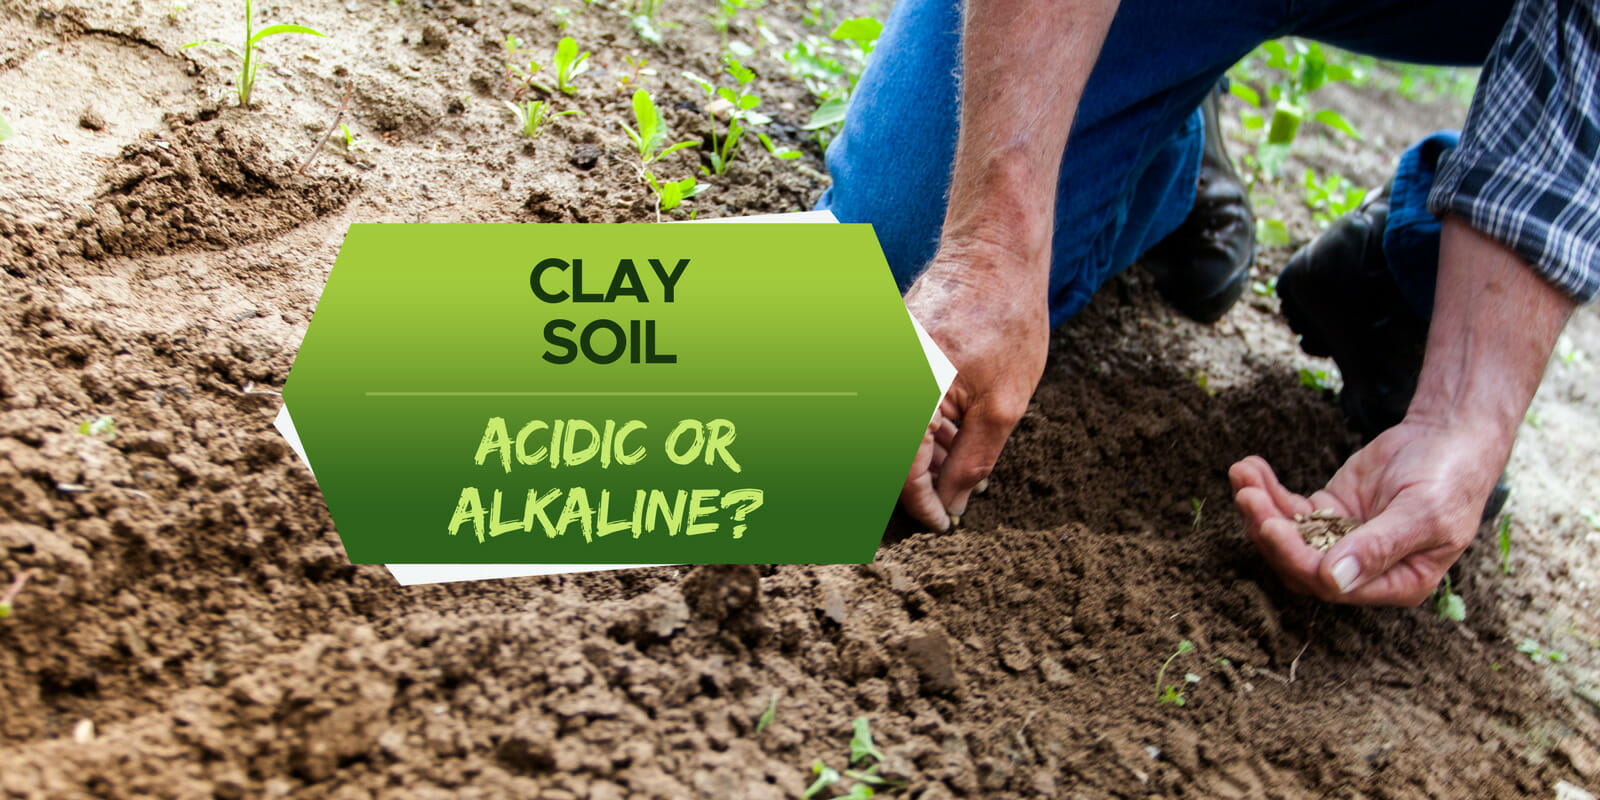 is clay soil acidic or alkaline